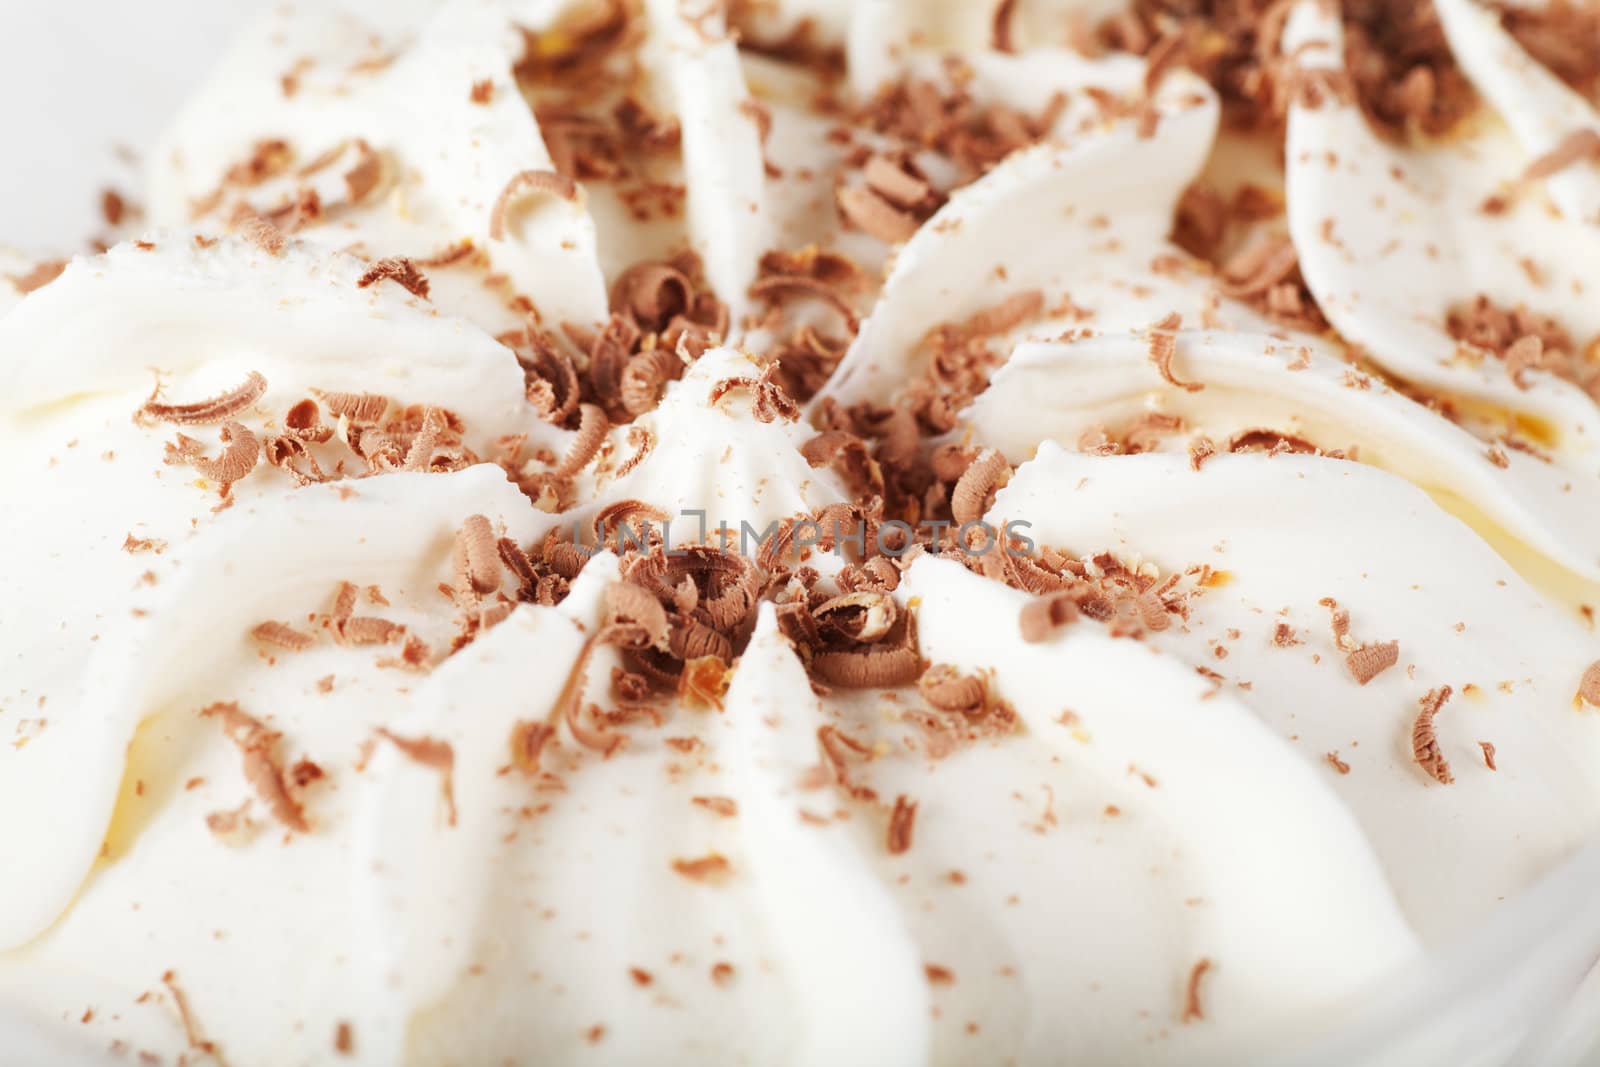 Macro view of ice-cream with chocolate shavings